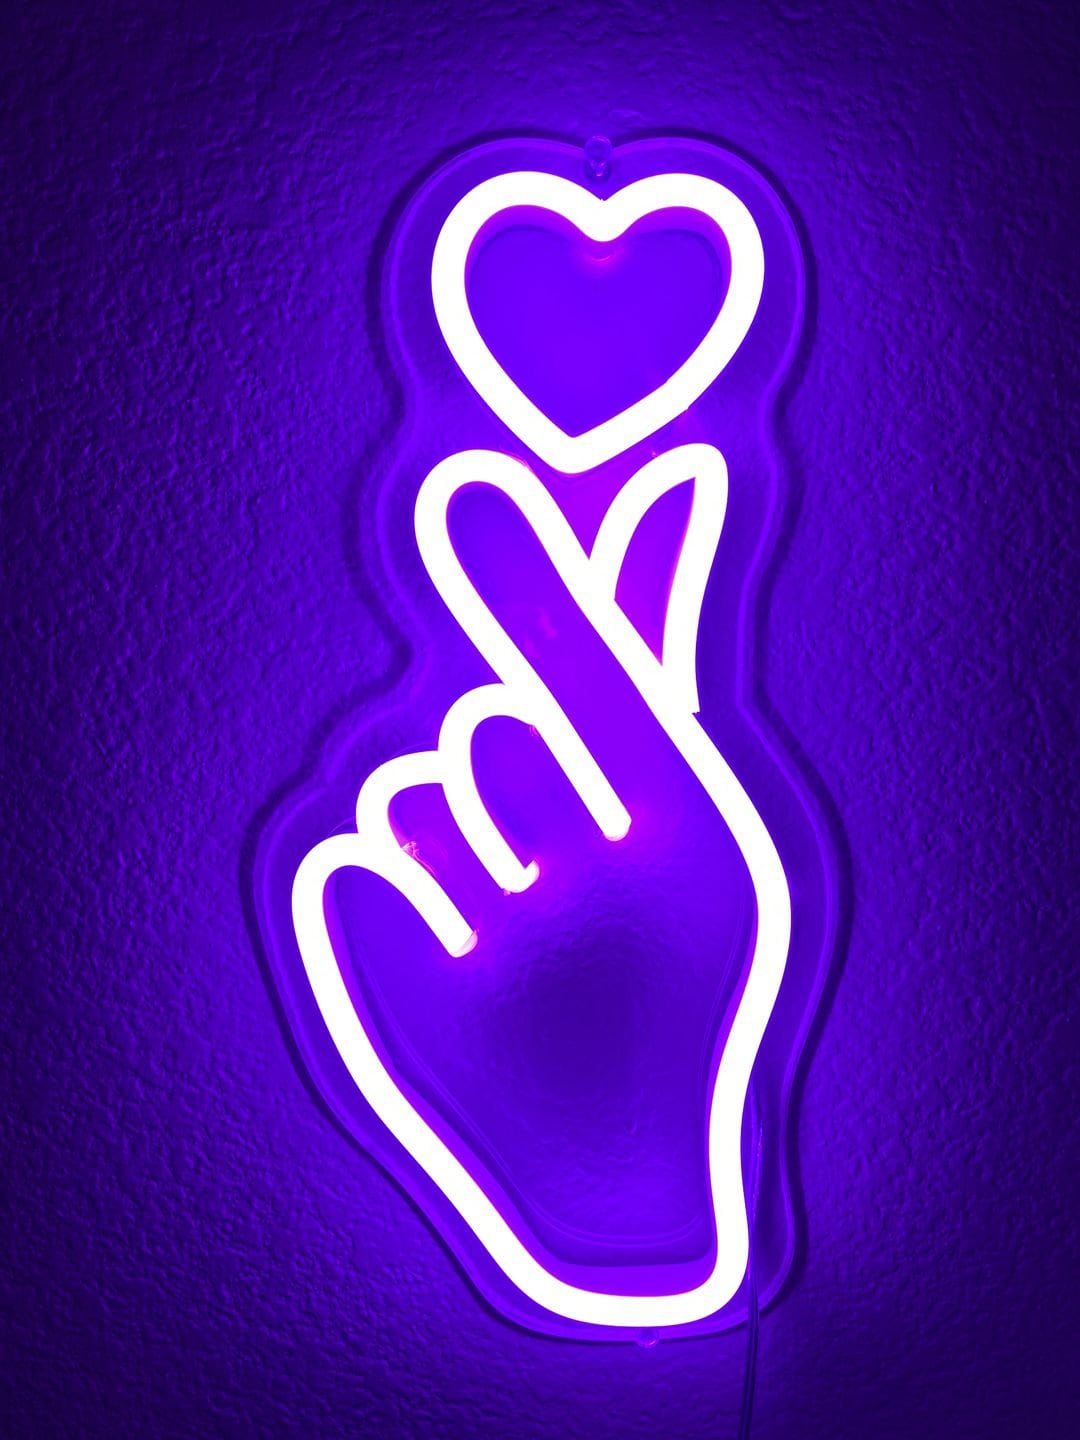 Handmade Heart Hand Neon Sign High Quality Neon Light Wall | Etsy